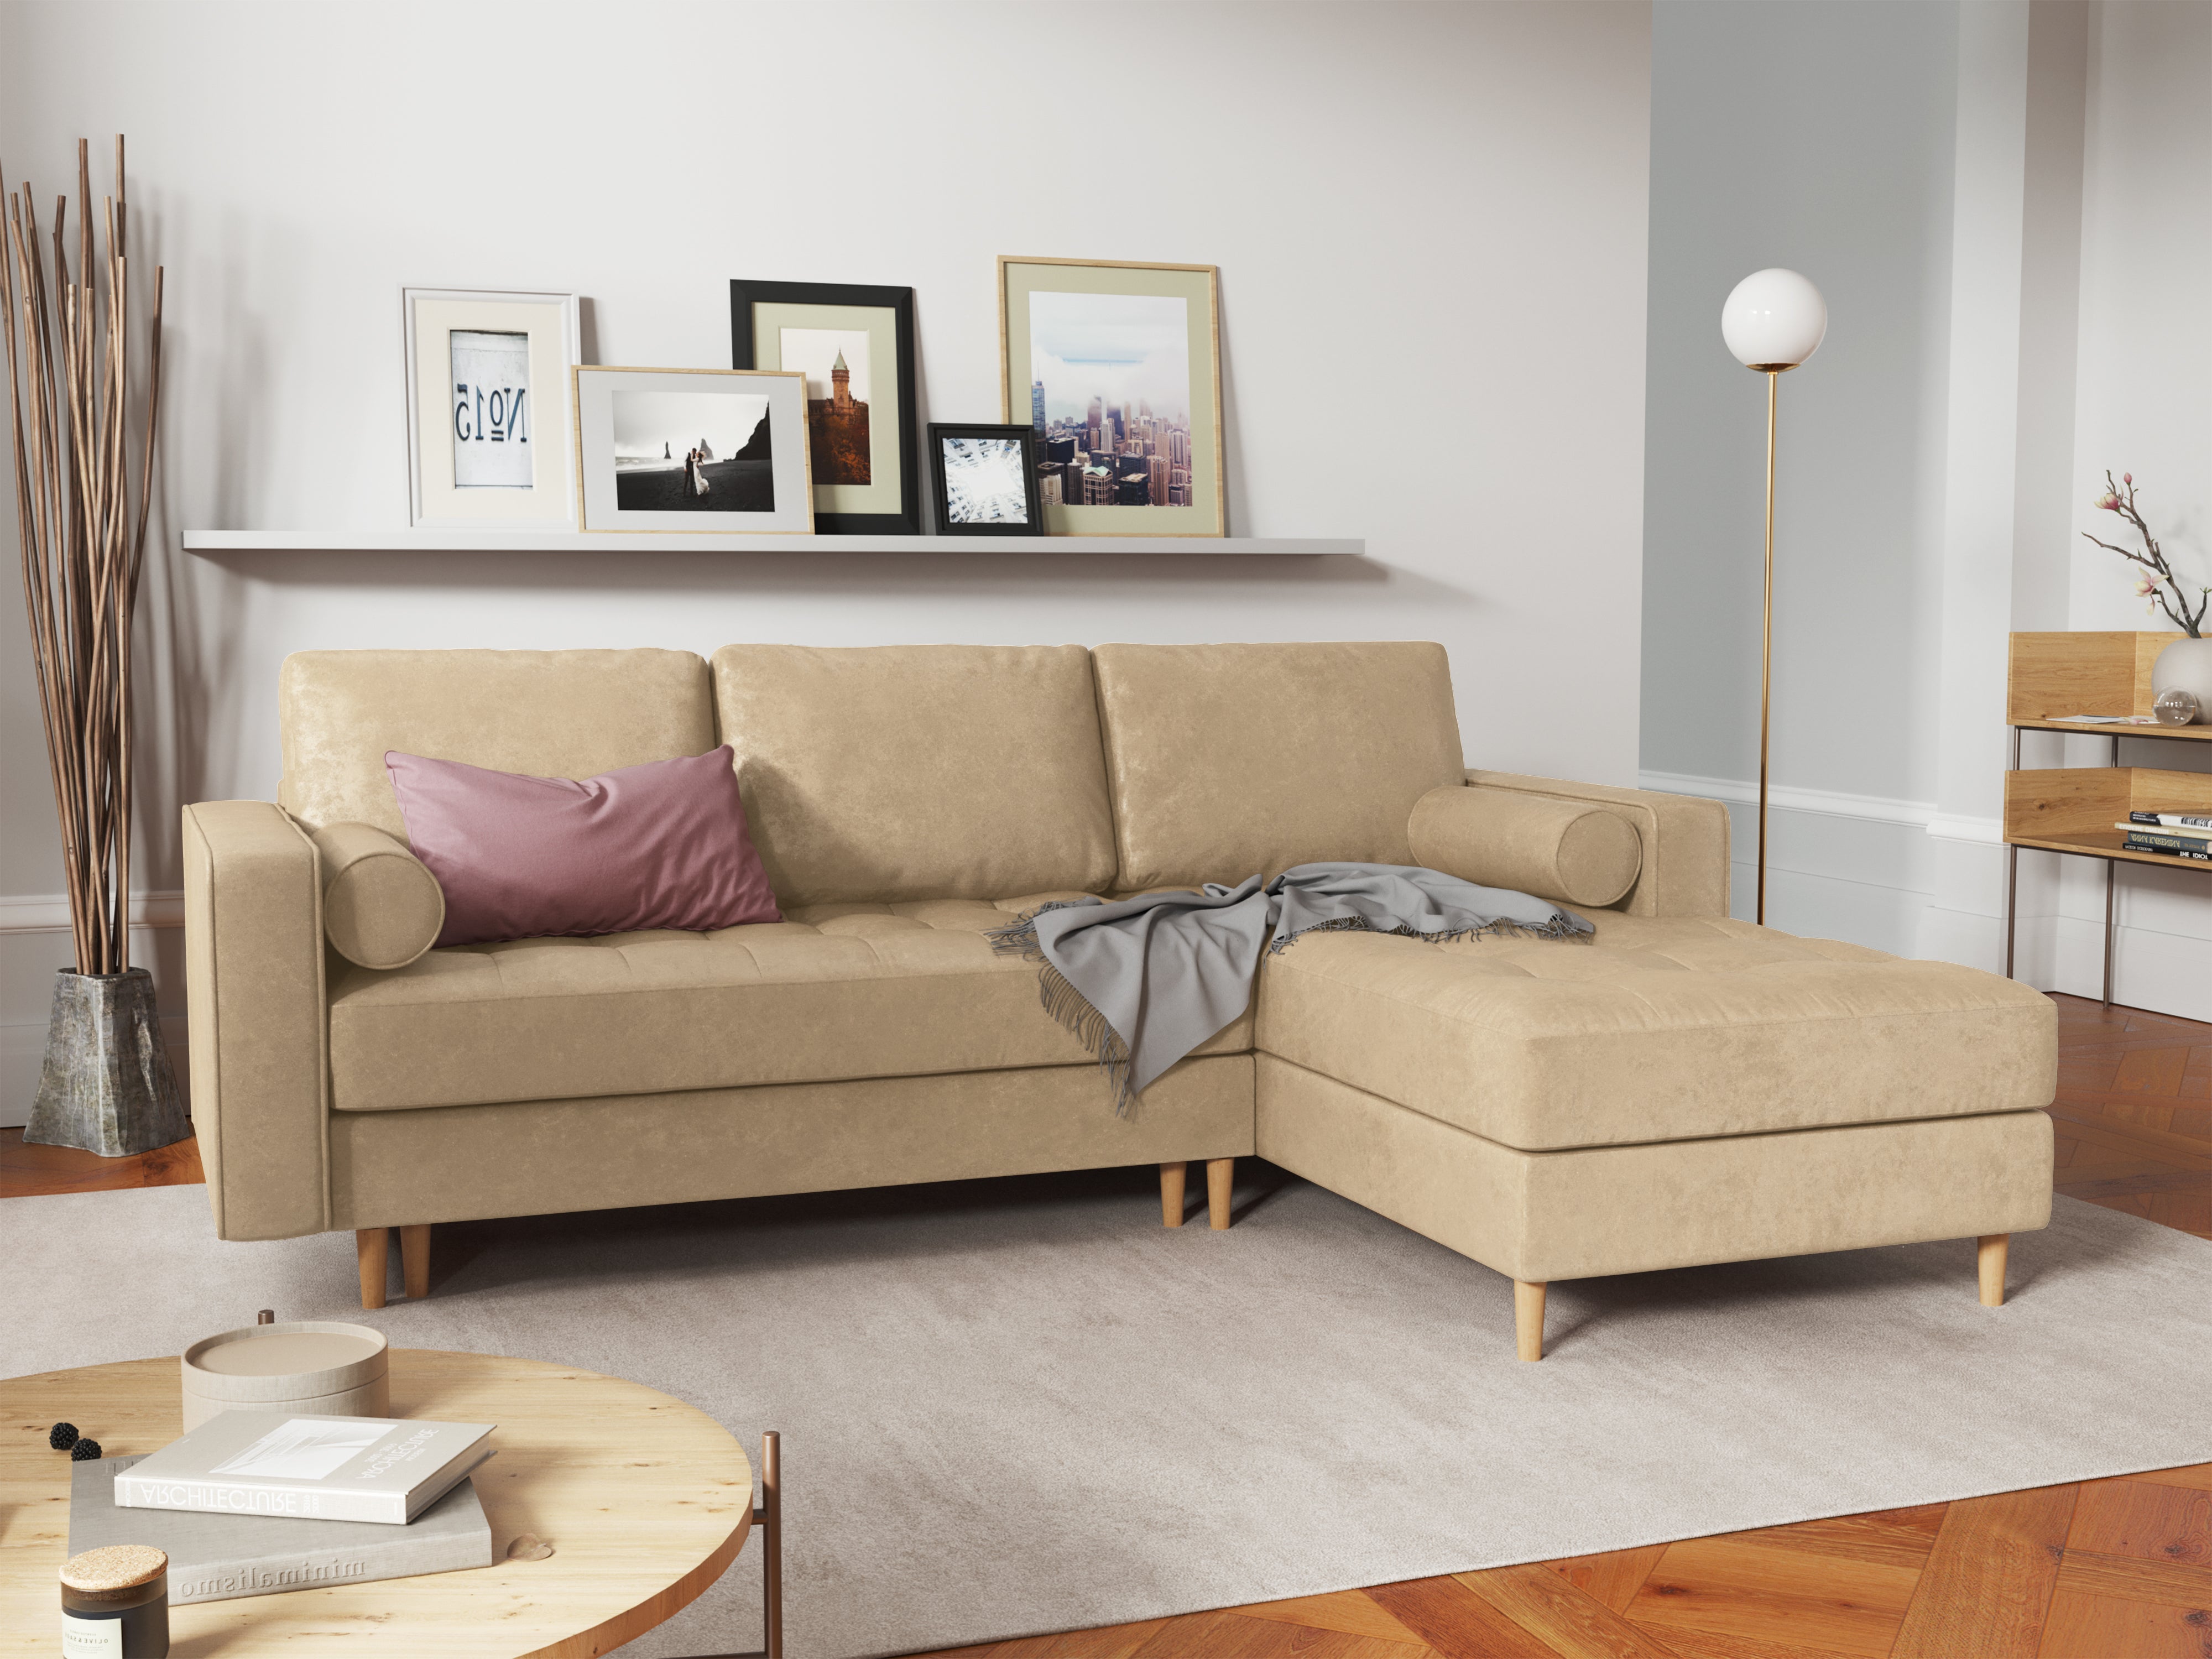 Right-angled corner sofa with sleeping function GOBI eco leather sand-coloured